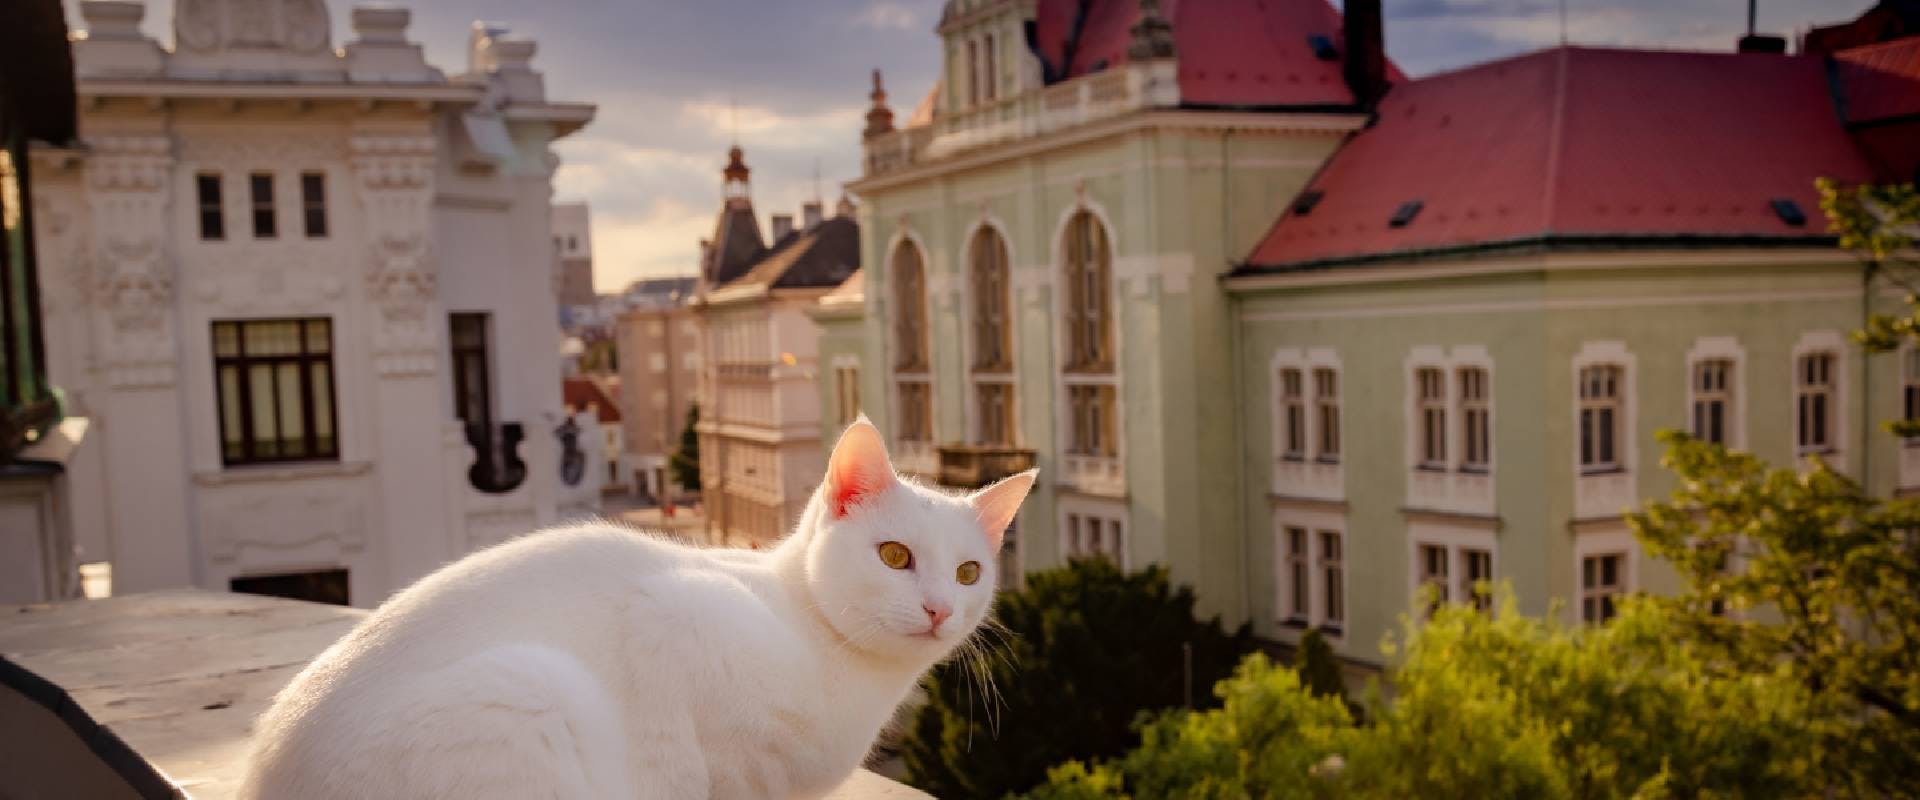 Cat on a balcony in Europe